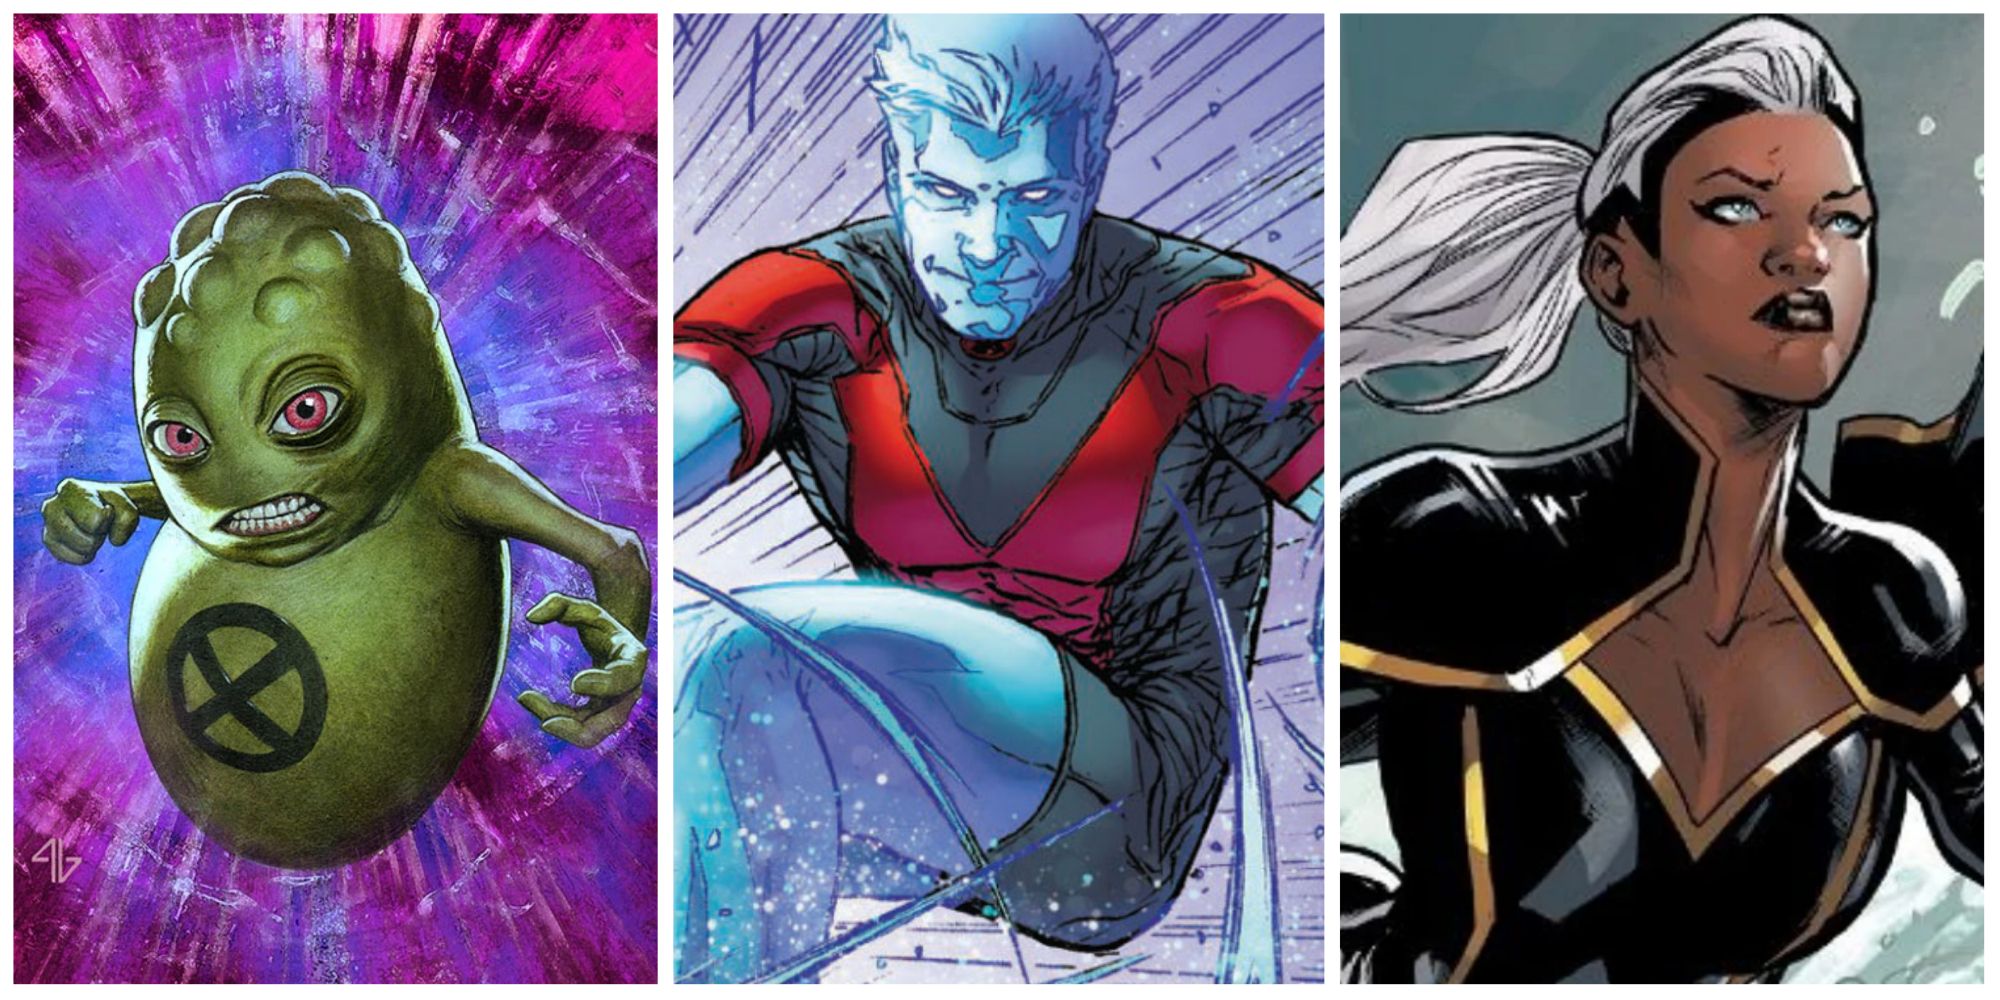 A split image of various X-Men members, including Doop, Iceman, and Storm